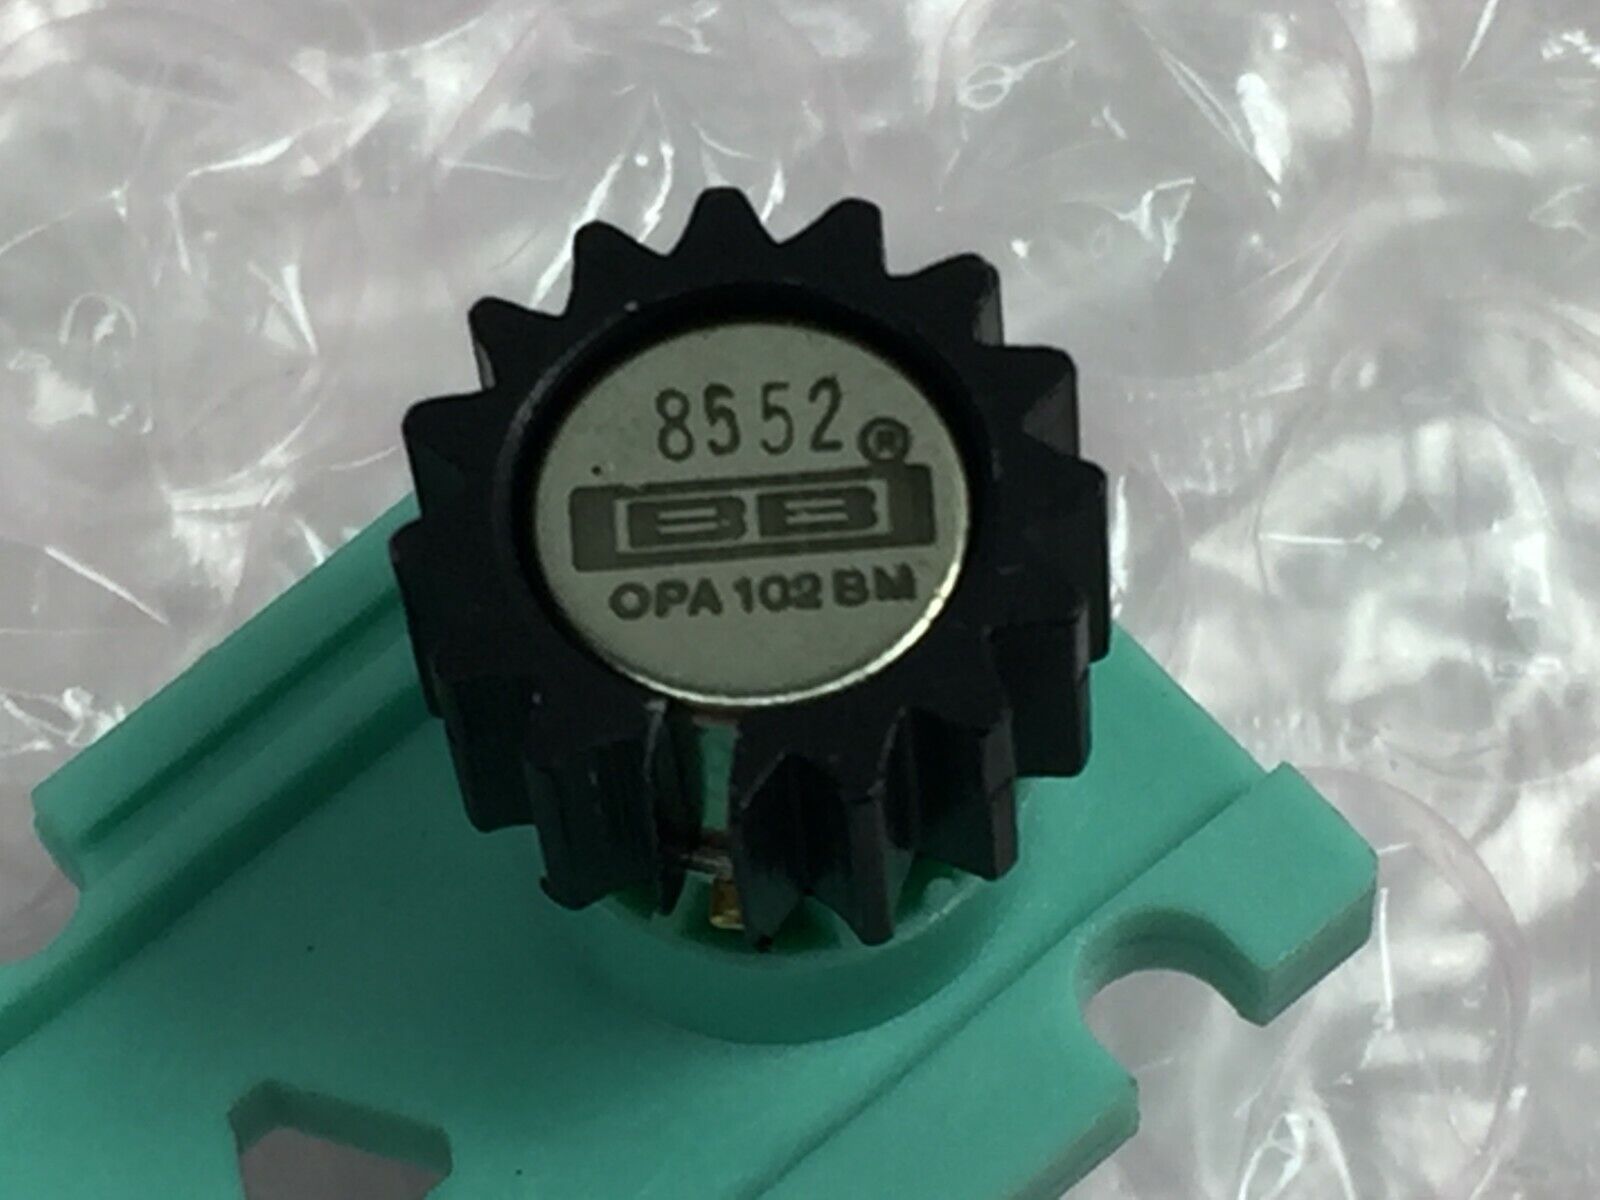 BB OPA102BM Integrated Circuit  NOS